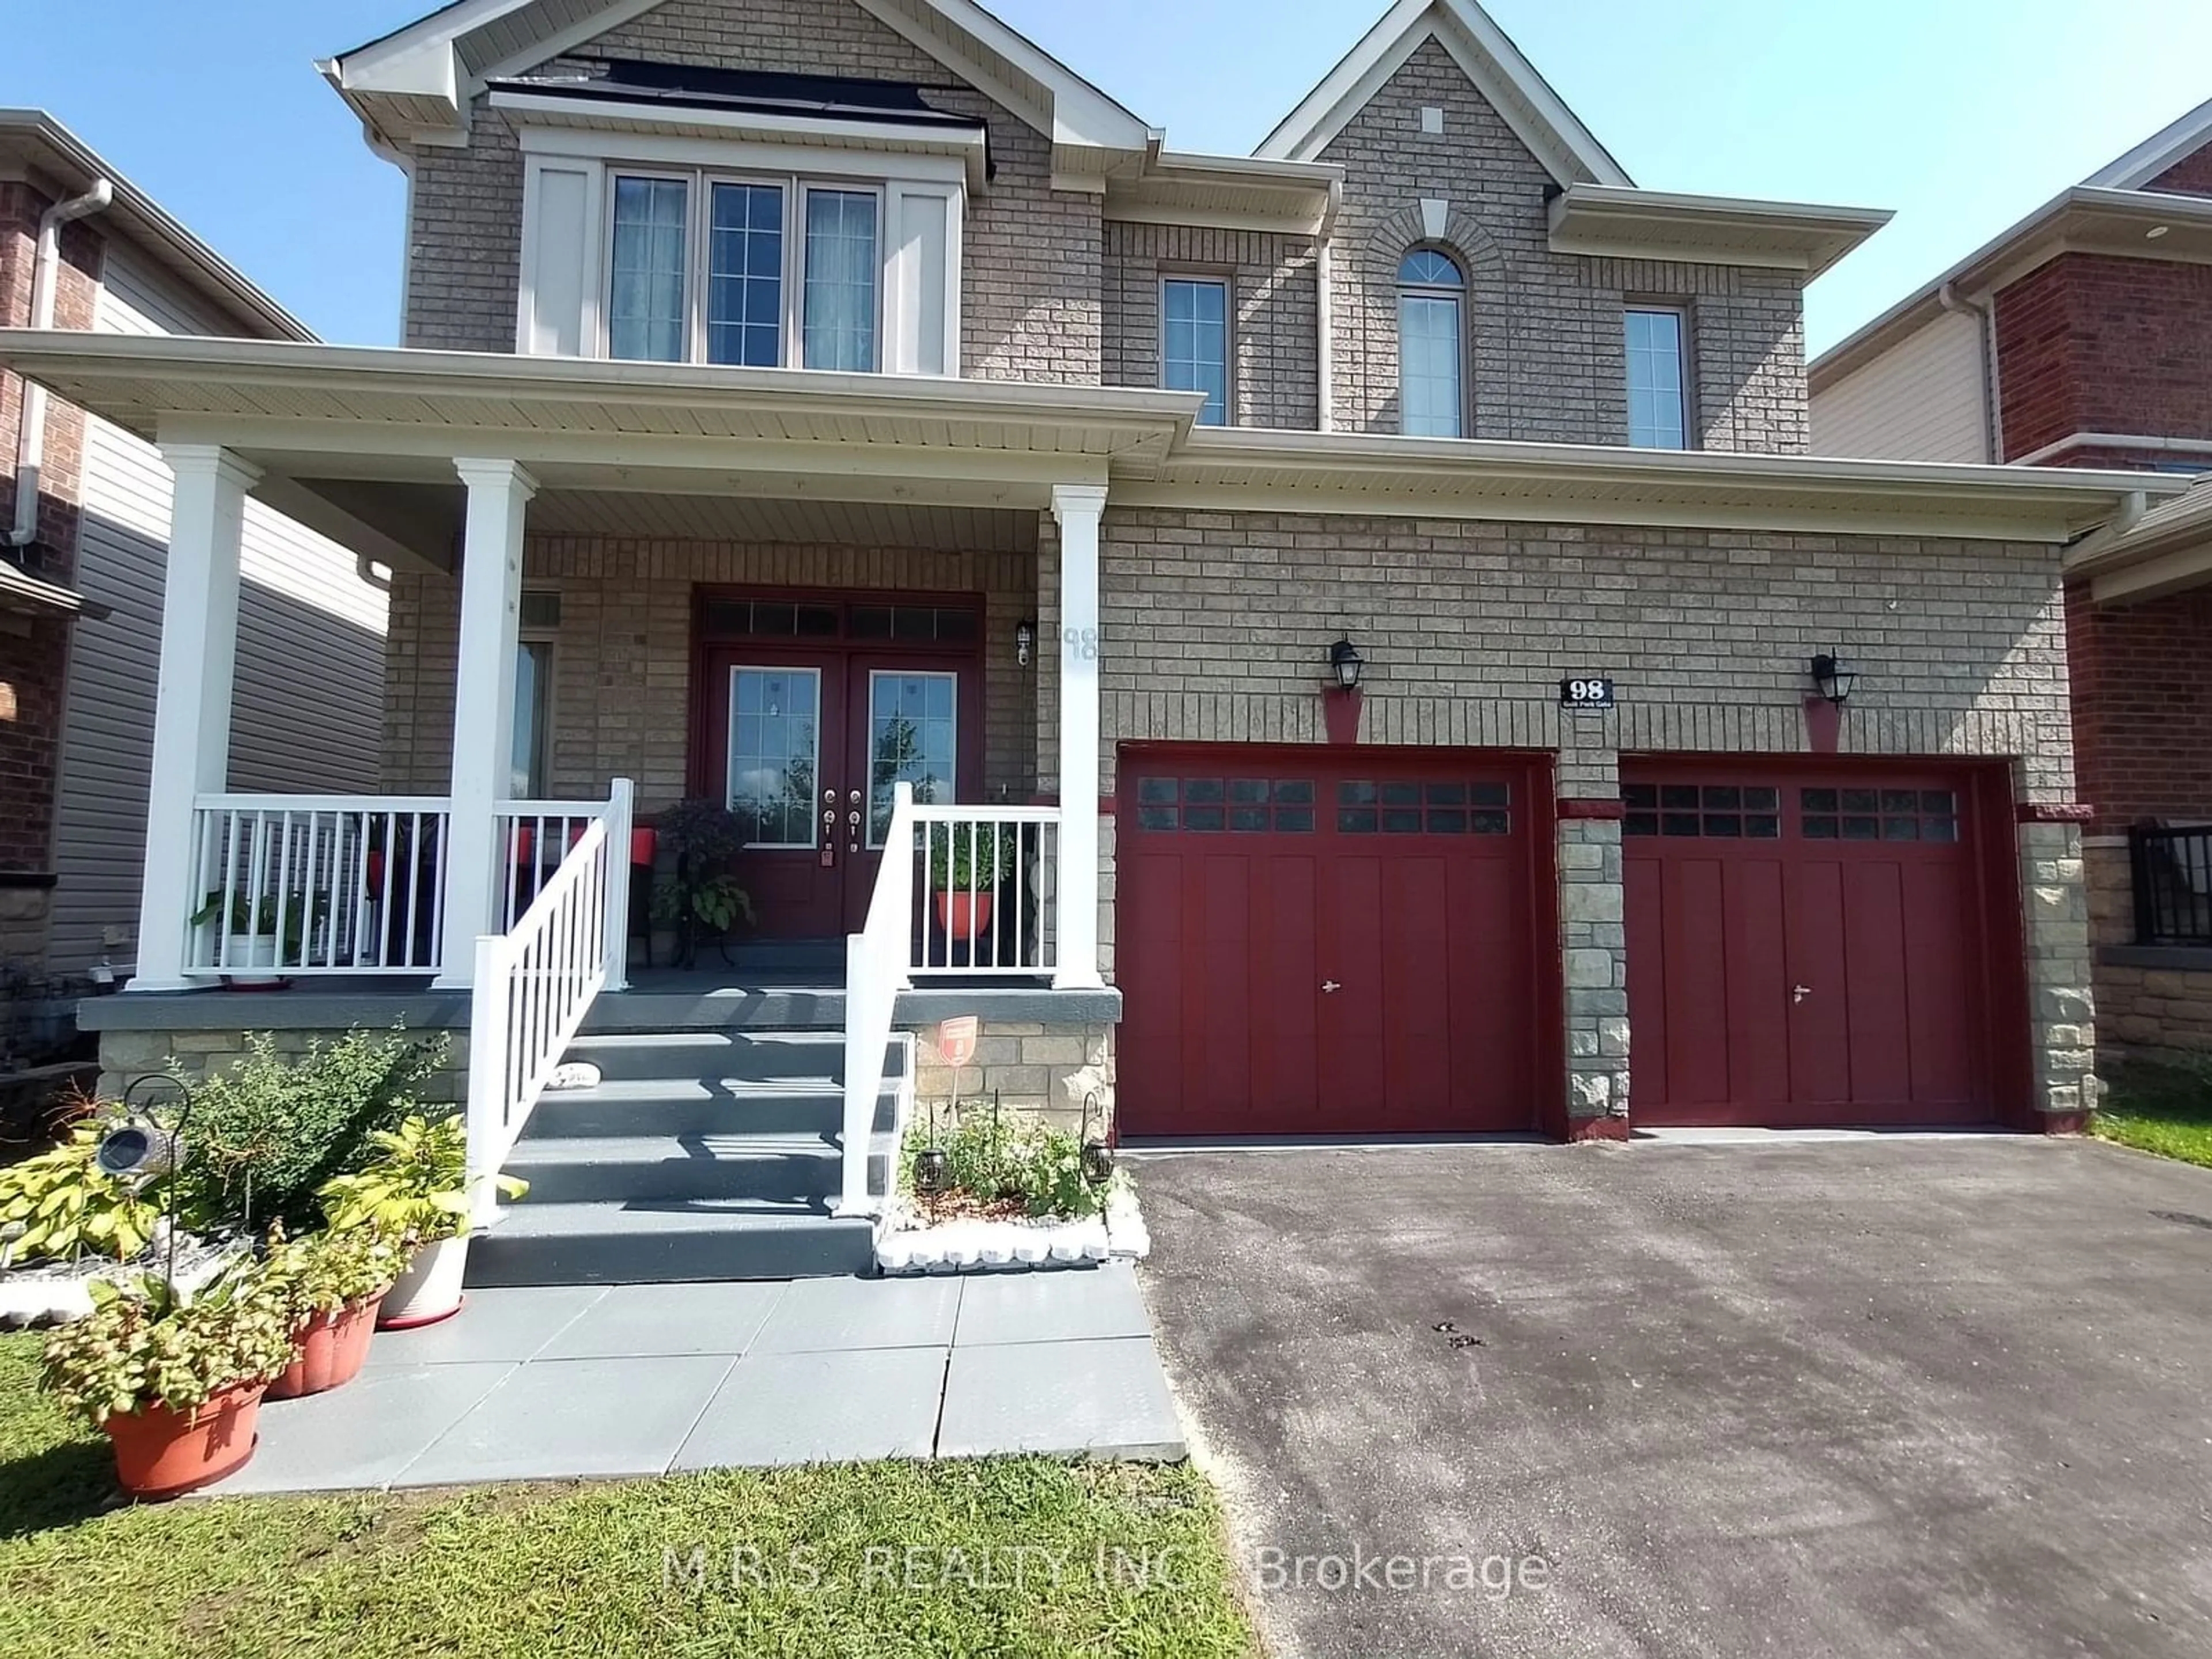 Home with brick exterior material for 98 Gold Park Gate, Essa Ontario L0M 1B4